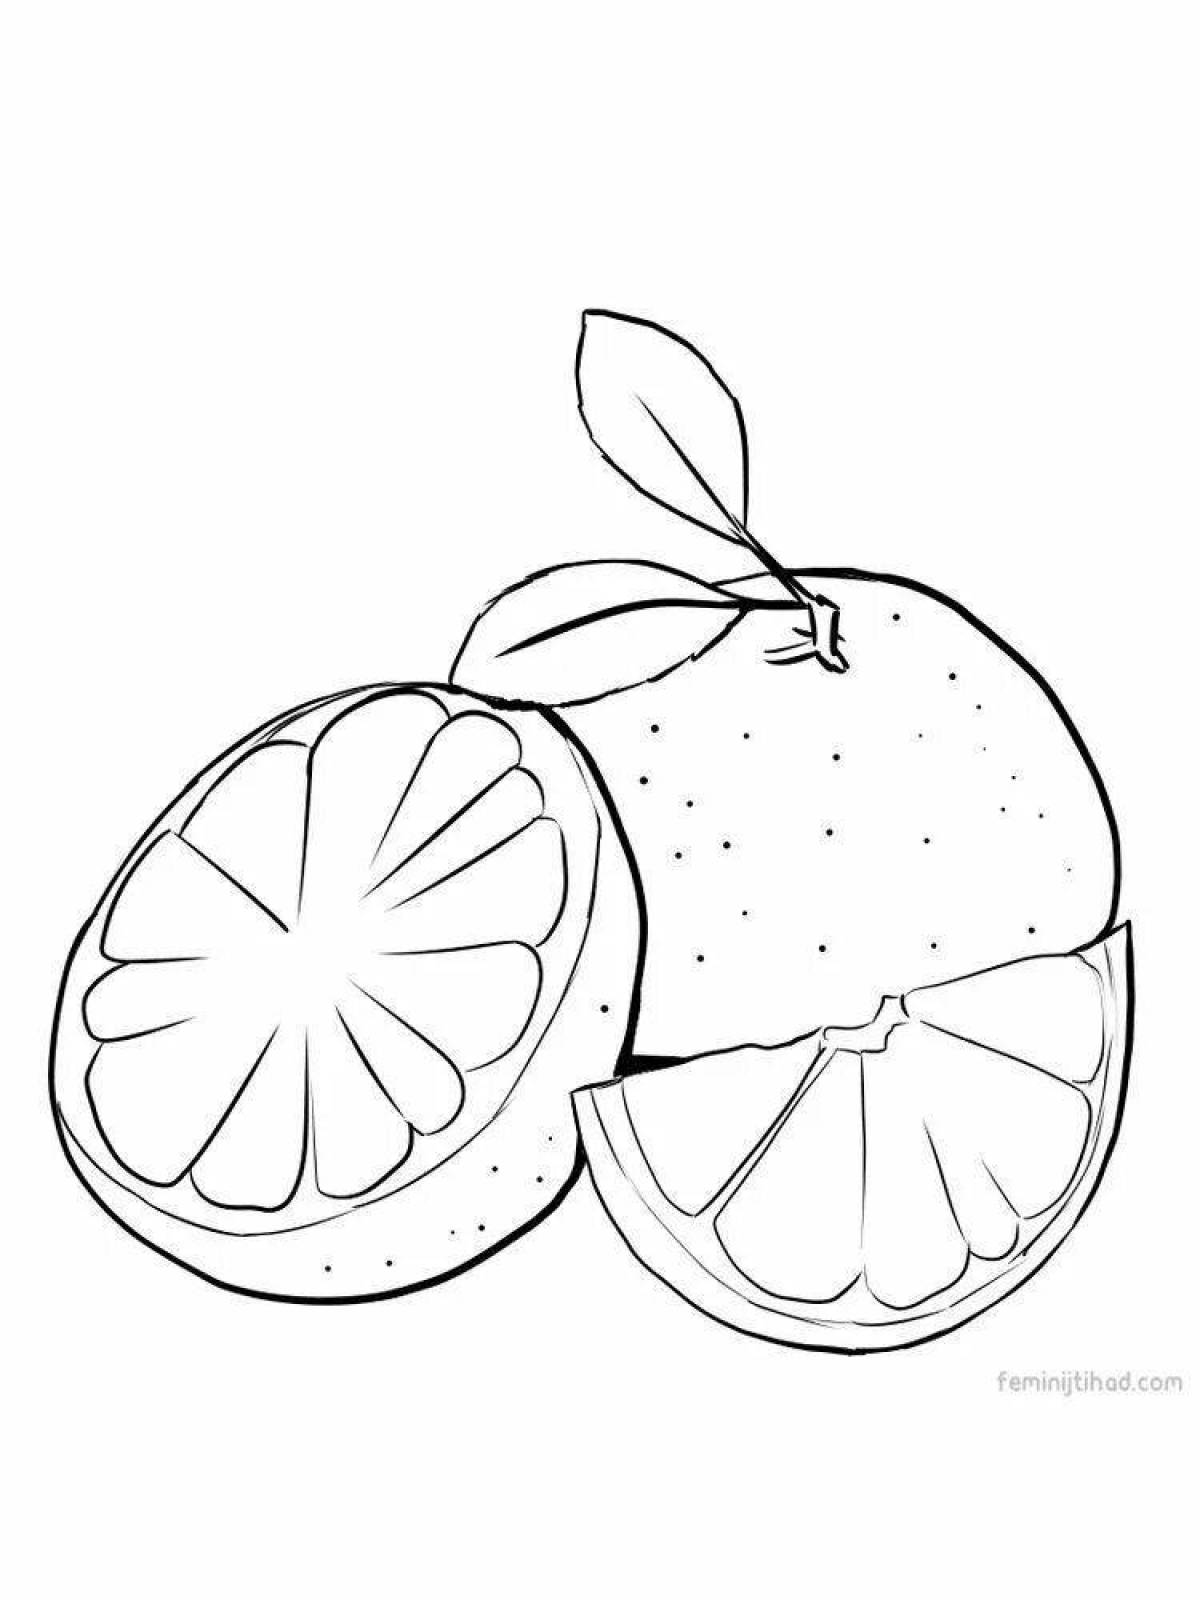 Playful grapefruit coloring page